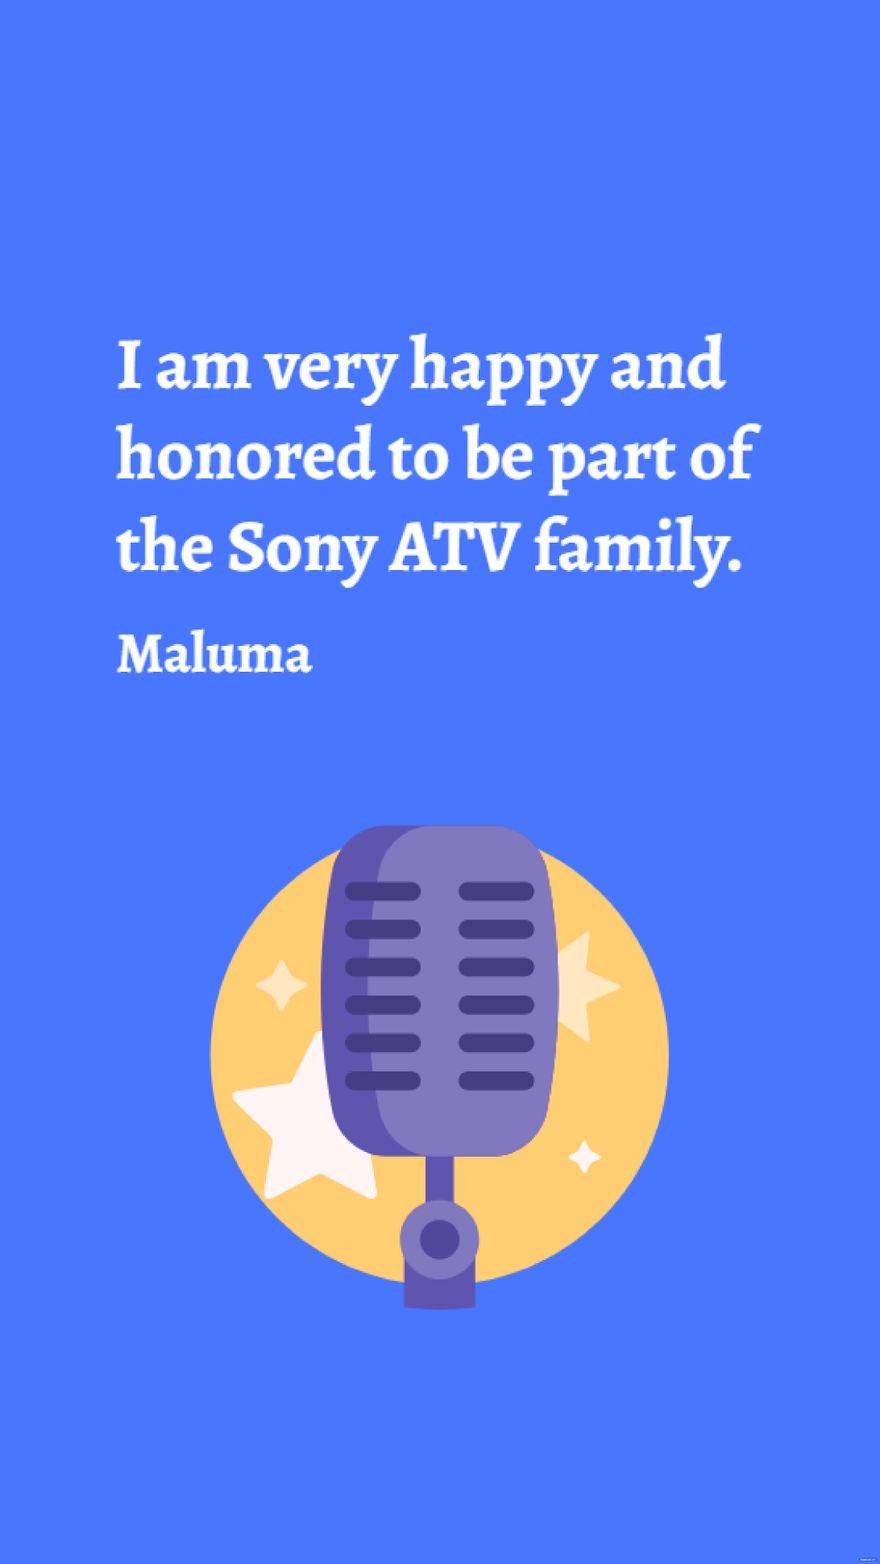 Free Maluma - I am very happy and honored to be part of the Sony ATV family.